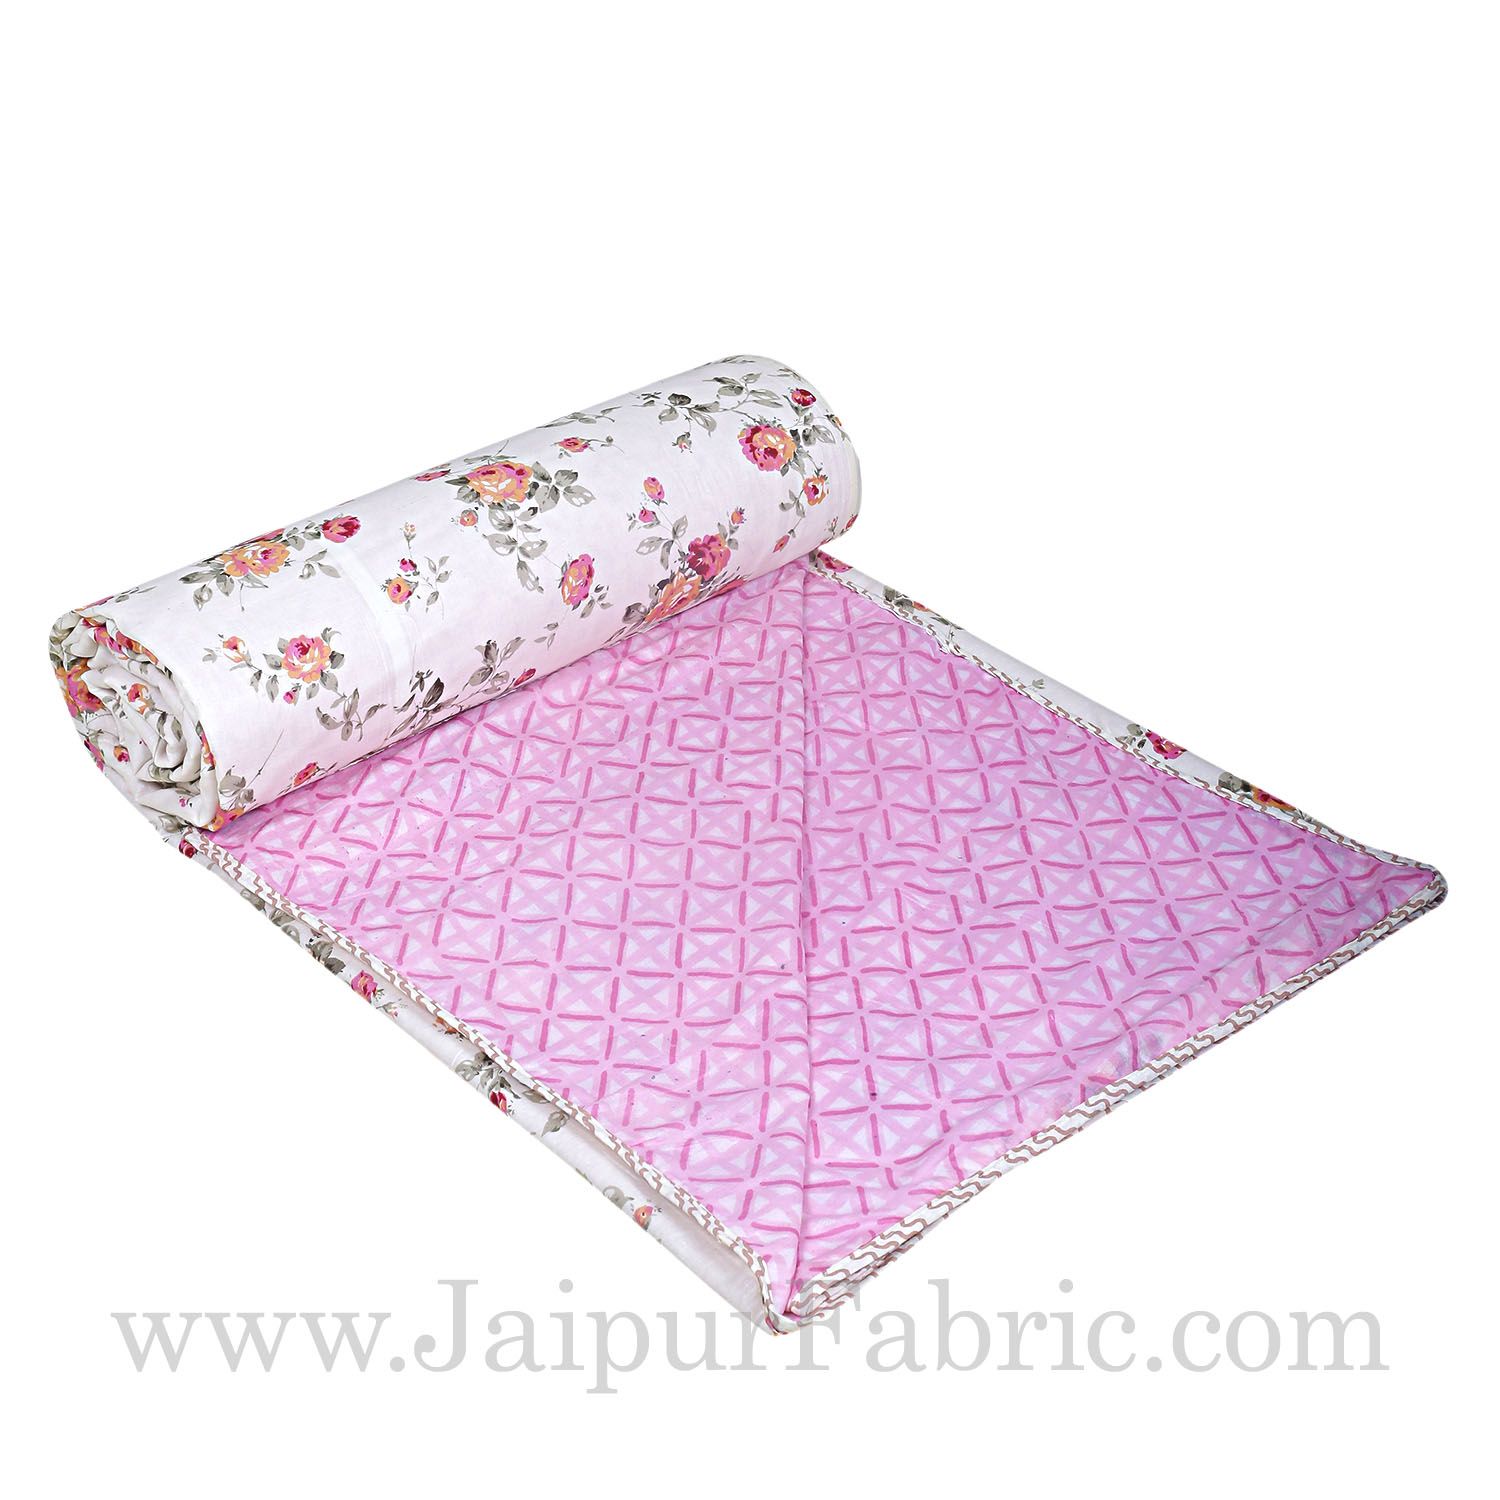 Muslin Cotton Double bed Reversible mulmul Dohar in multicolour motif floral print